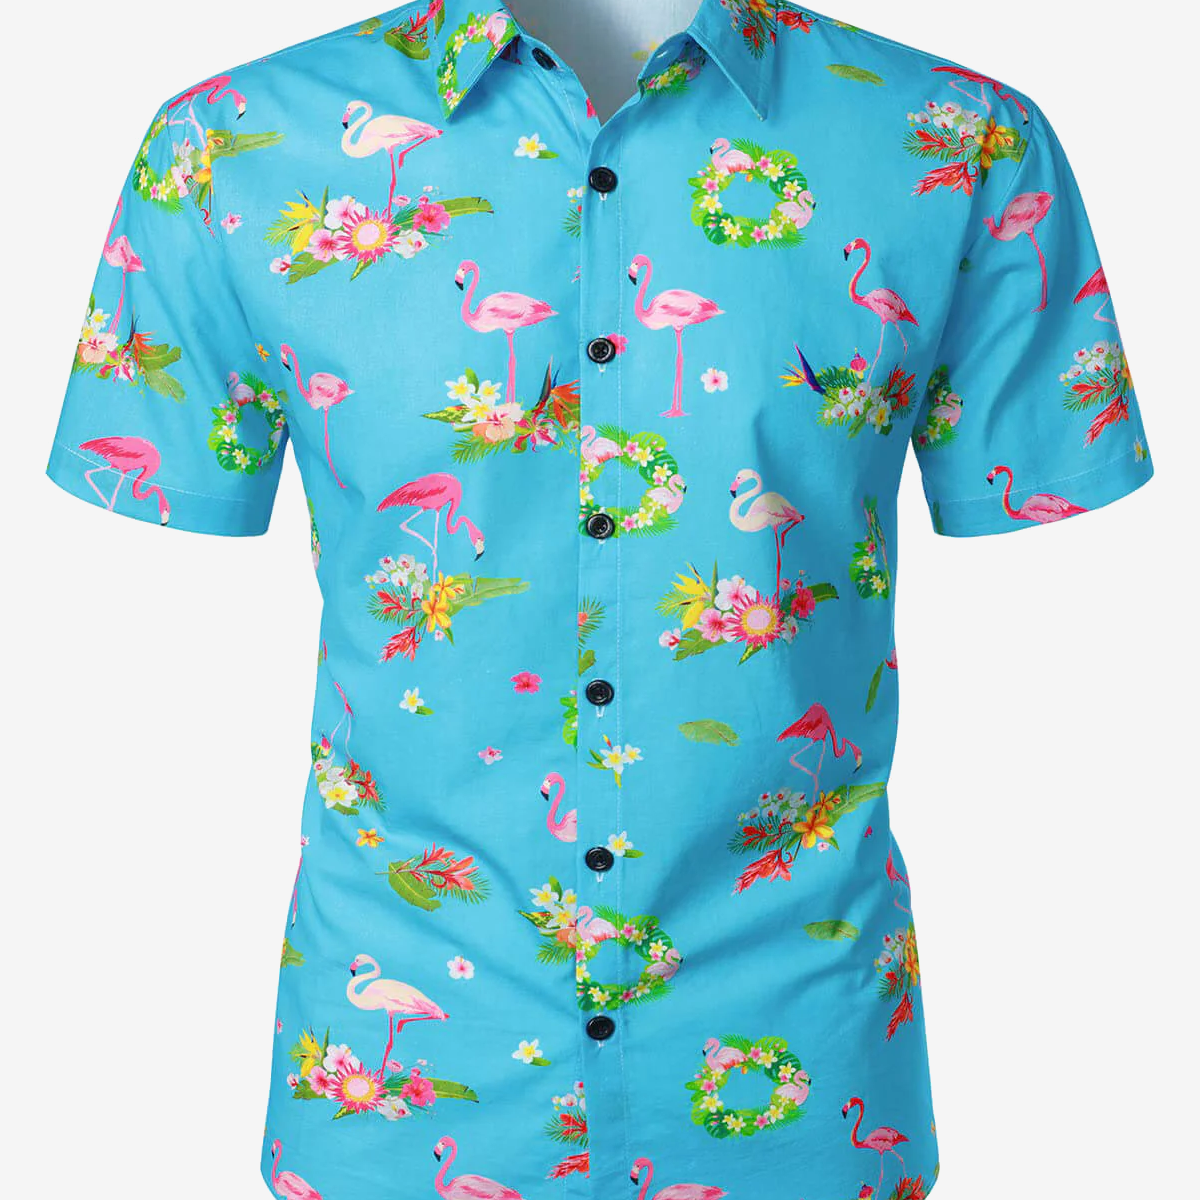 Men's Cotton Flamingo Tropical Island Short Sleeve Summer Beach Button Hawaiian Shirt